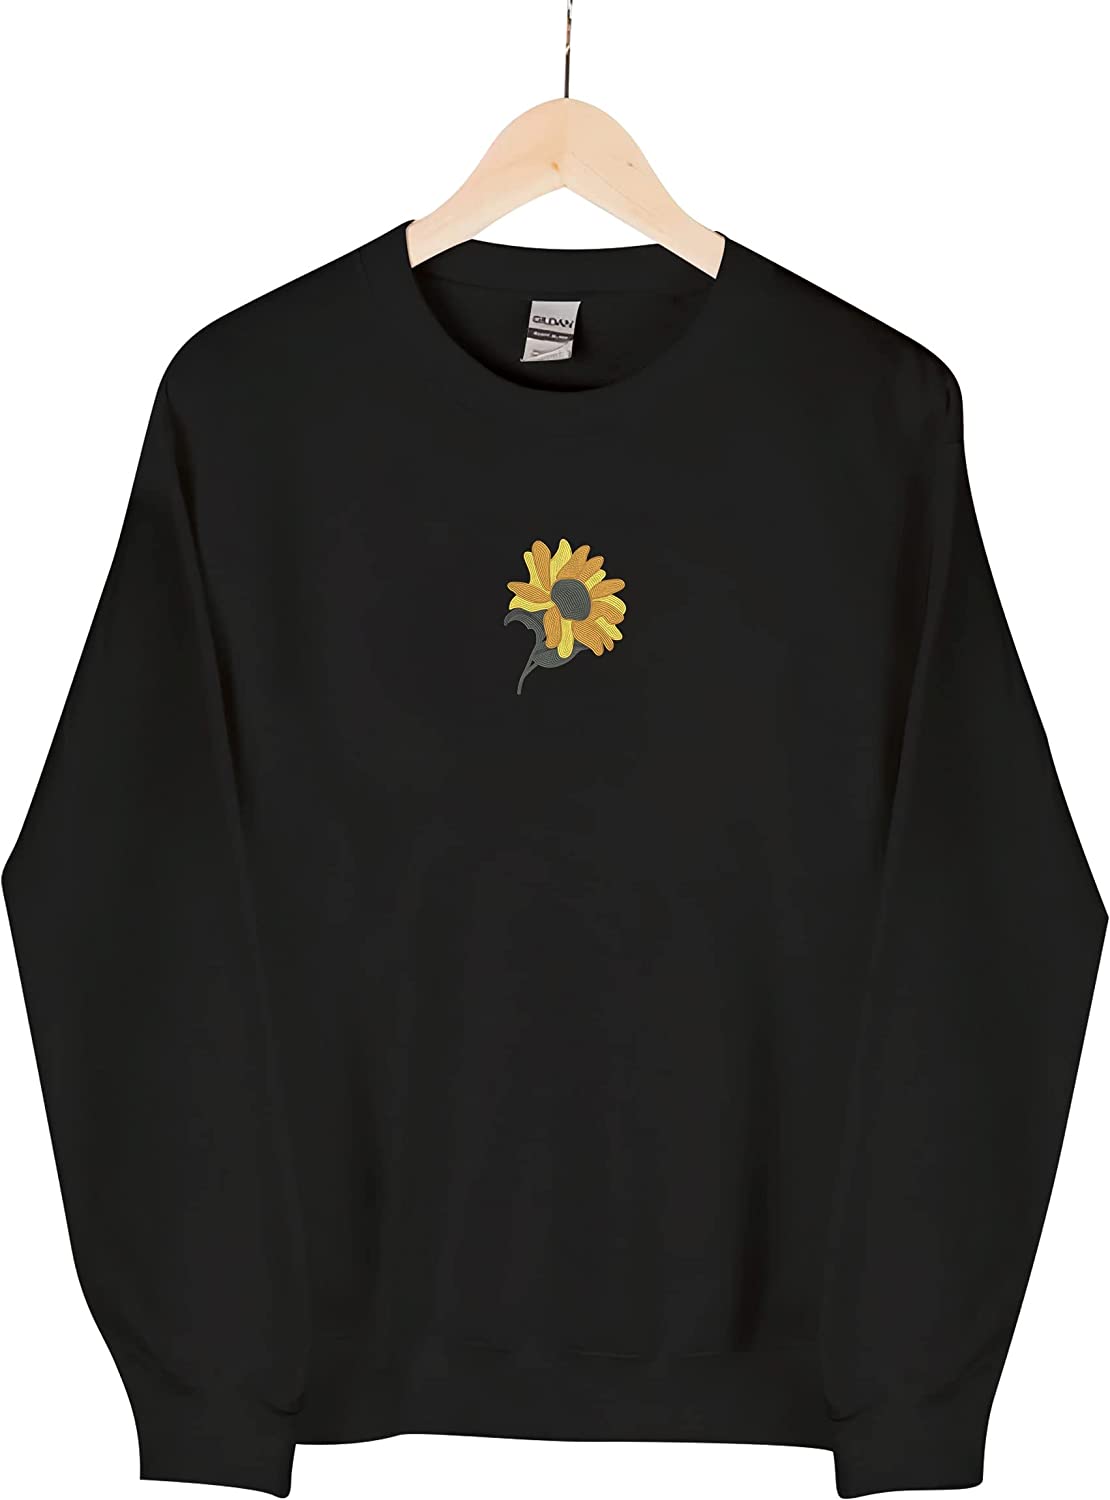 Ted Baker Long Sleeve Embroidered Flower Sweatshirt in Light